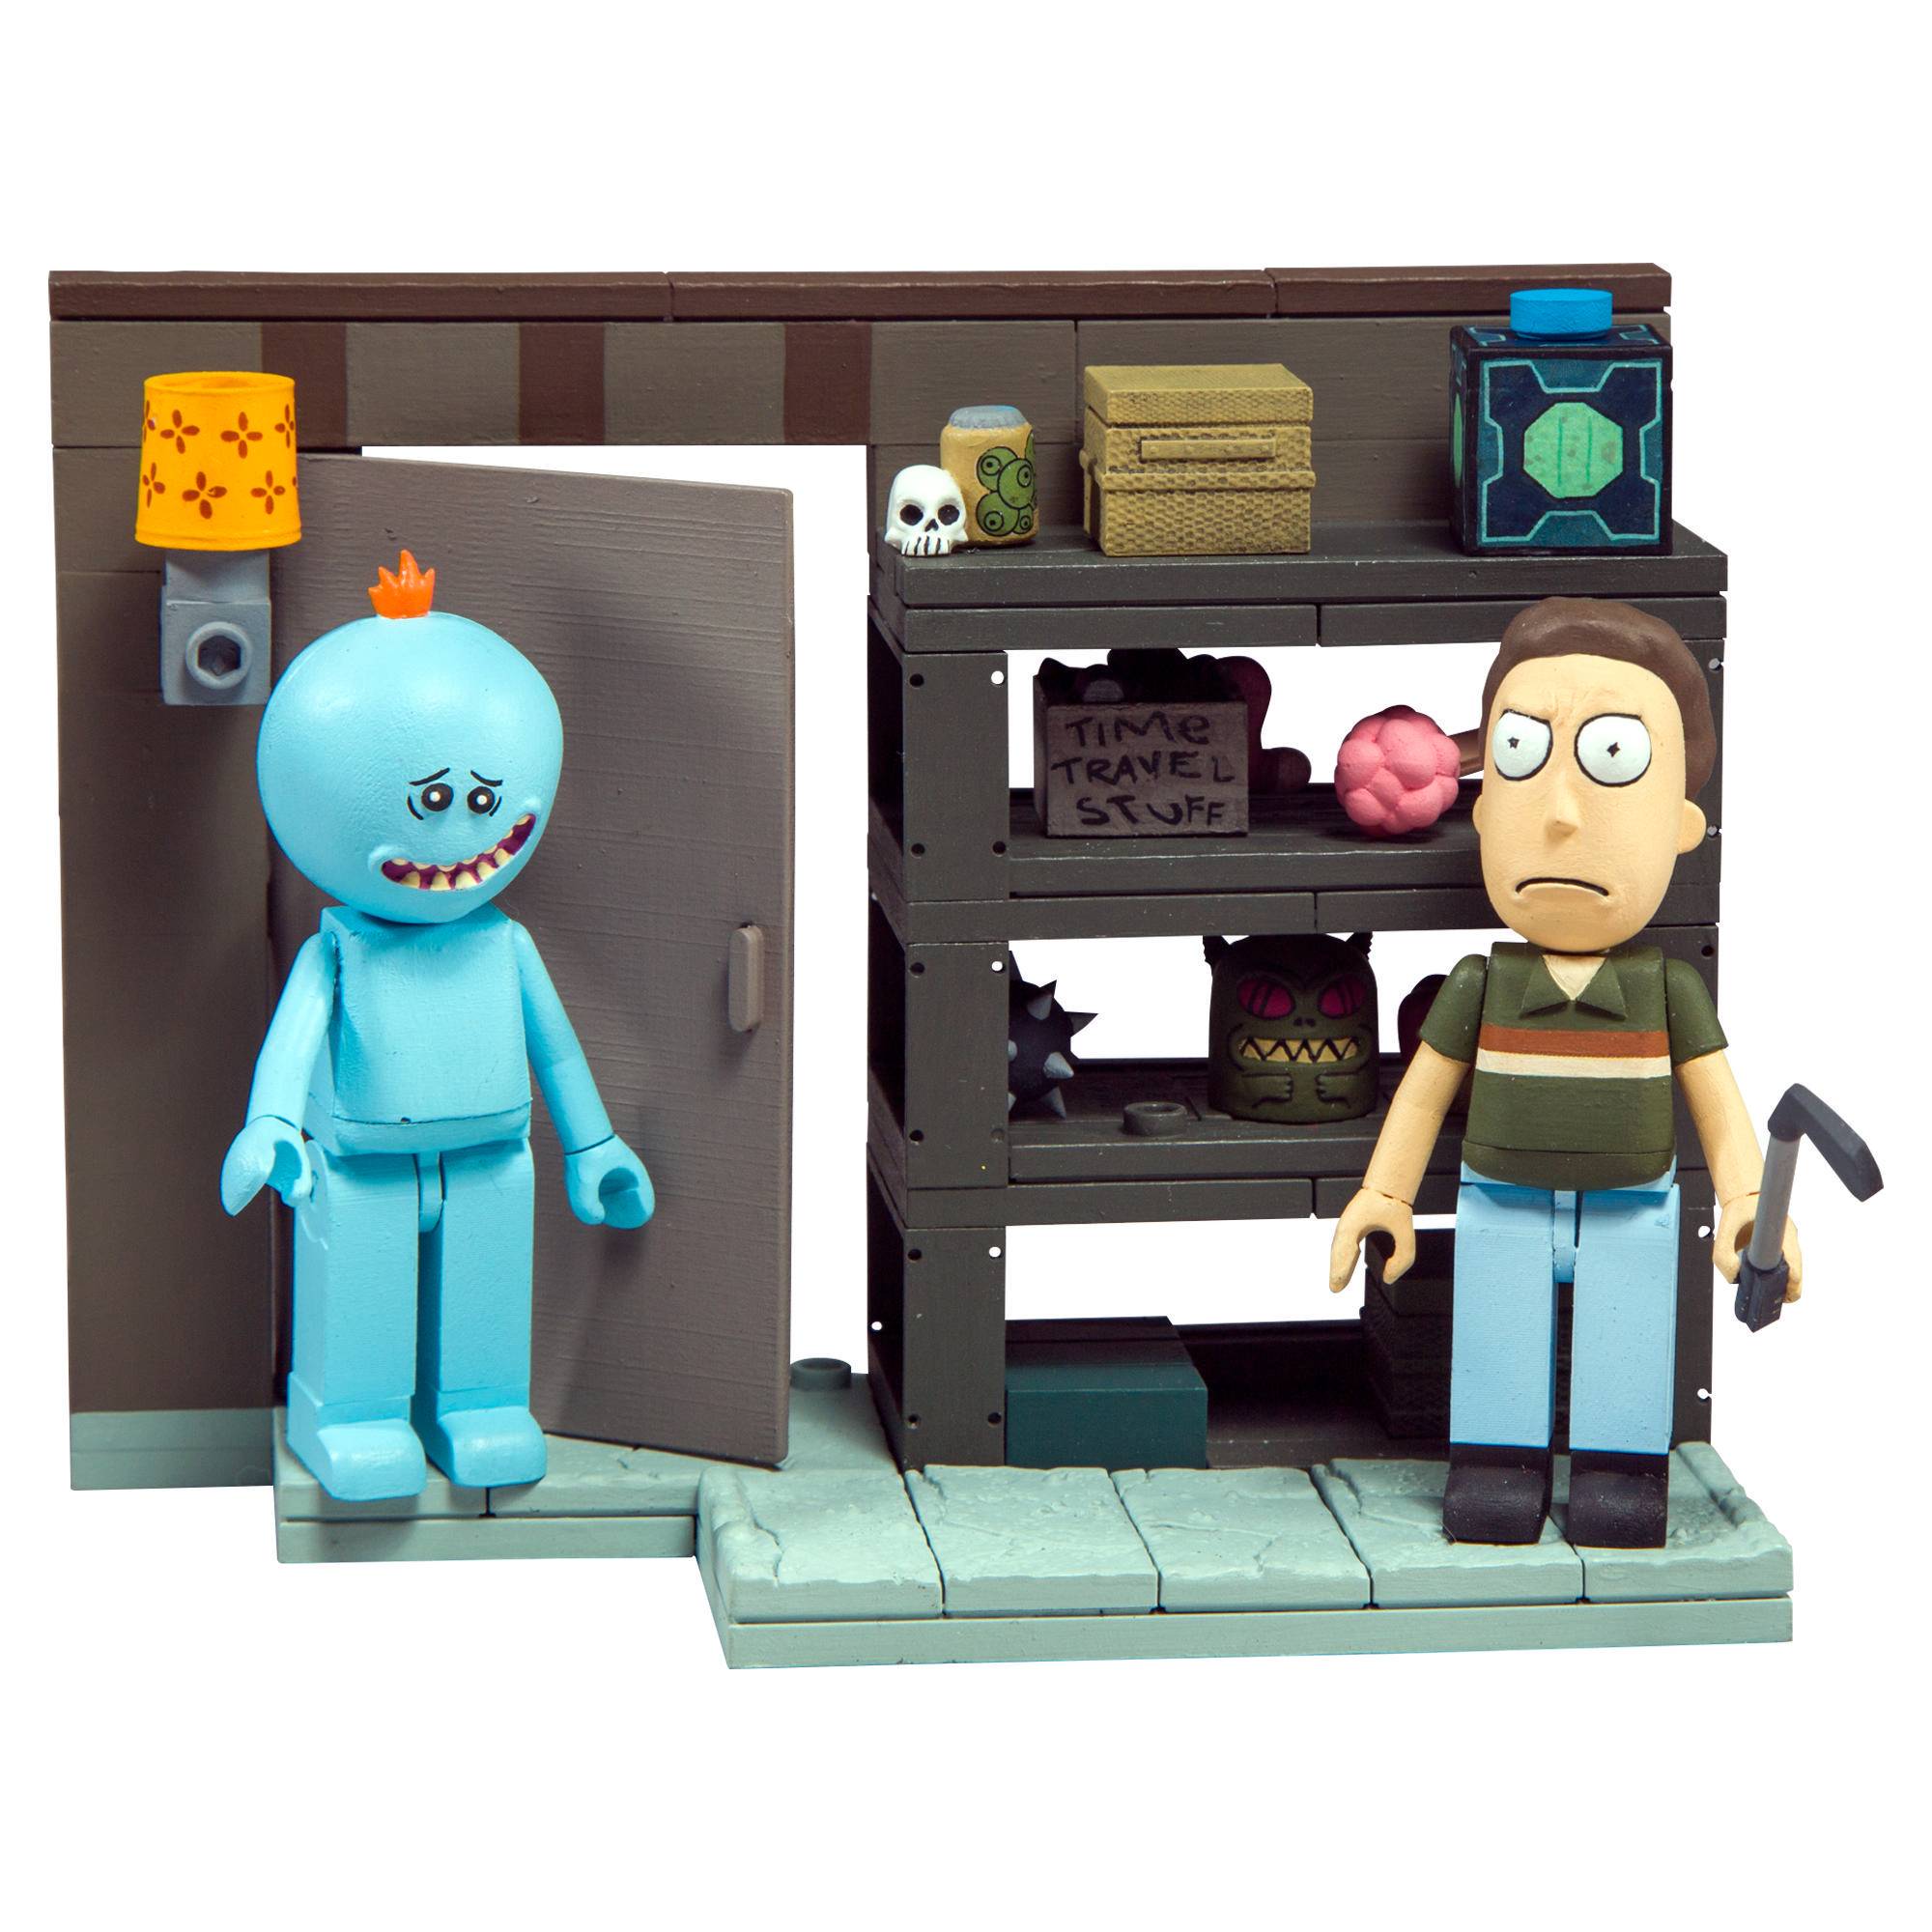 Оригинал McFlarane Toys Rick & Morty Small Set Series 1 Construction Se...